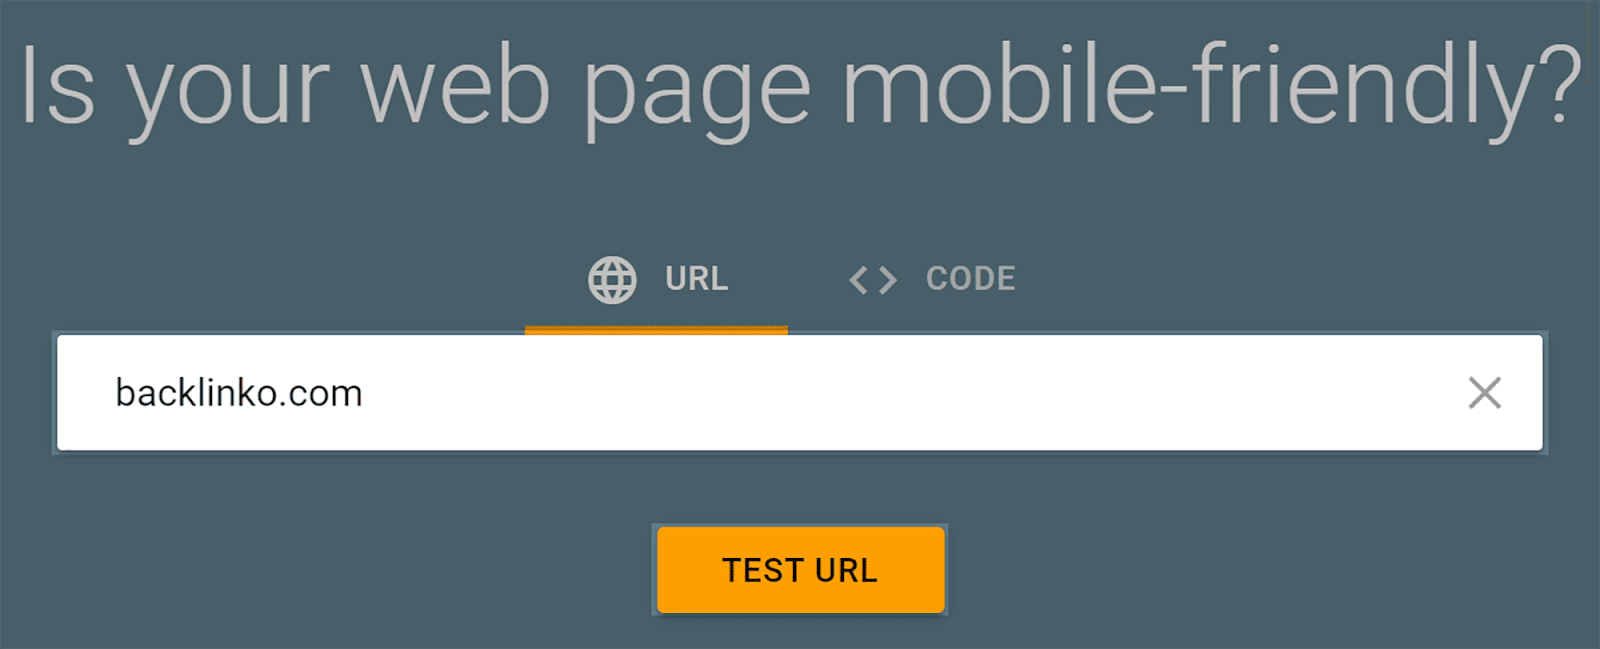 Test URL for mobile friendliness